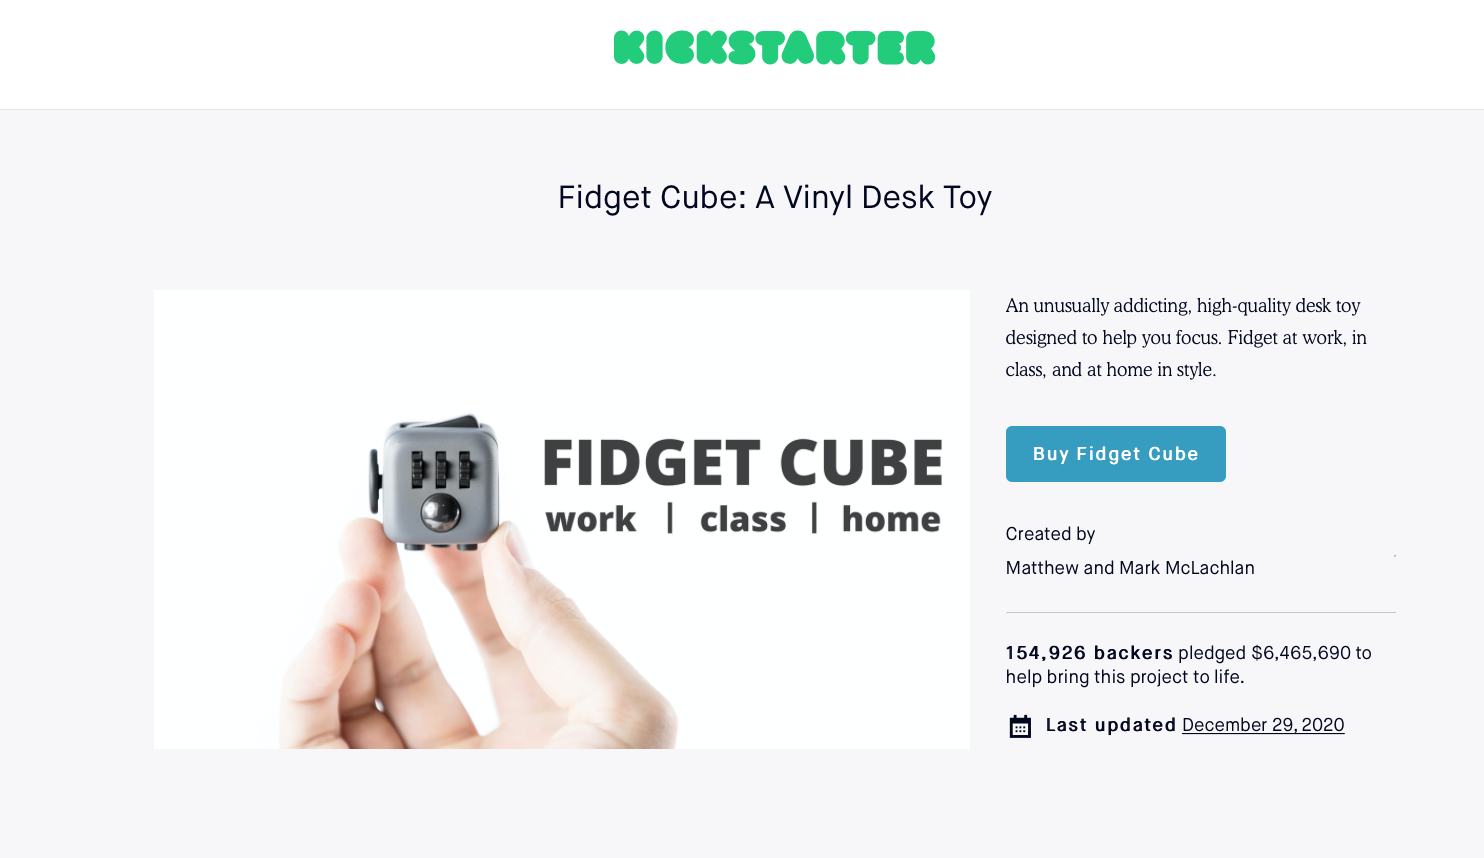 Kickstarter advertising and marketing: Fidget Cube was a huge crowdfunding success story